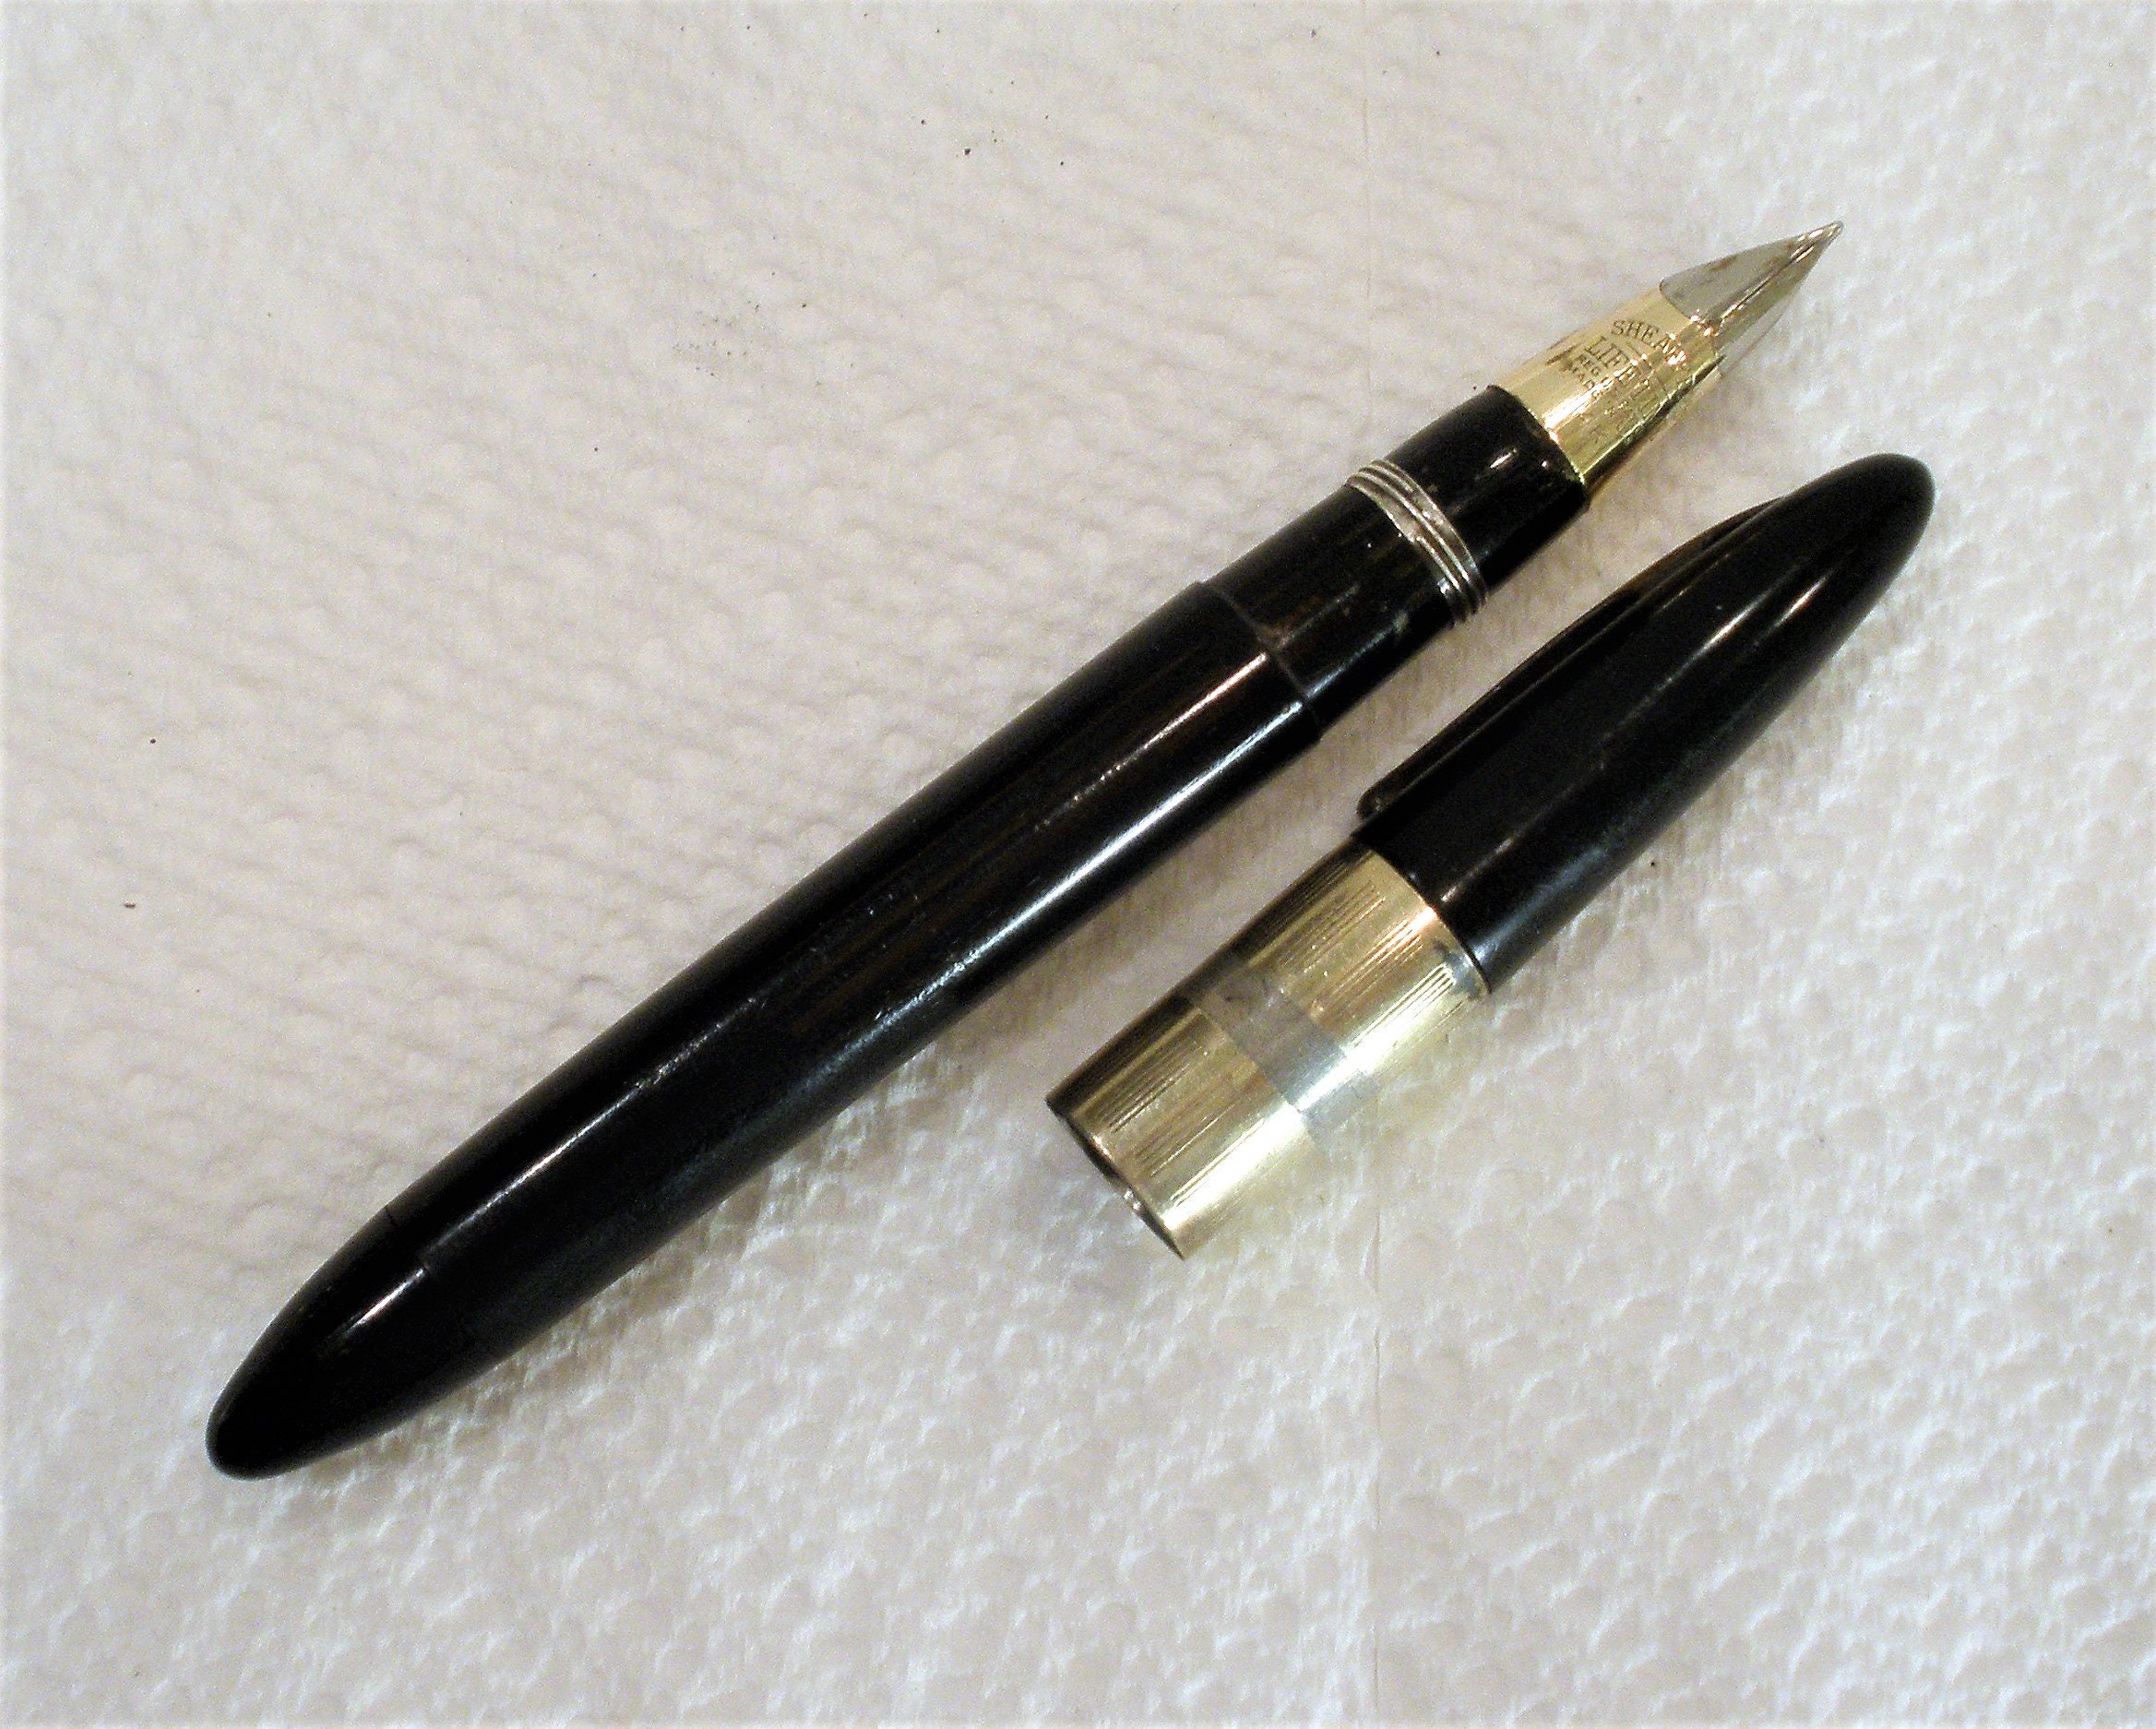 Vintage Sheaffer Fountain Pen / White Dot Sheaffer / 14K Gold Lifetime Nib  / Original & Complete / Collectible / Great Gift Item / ON SALE 